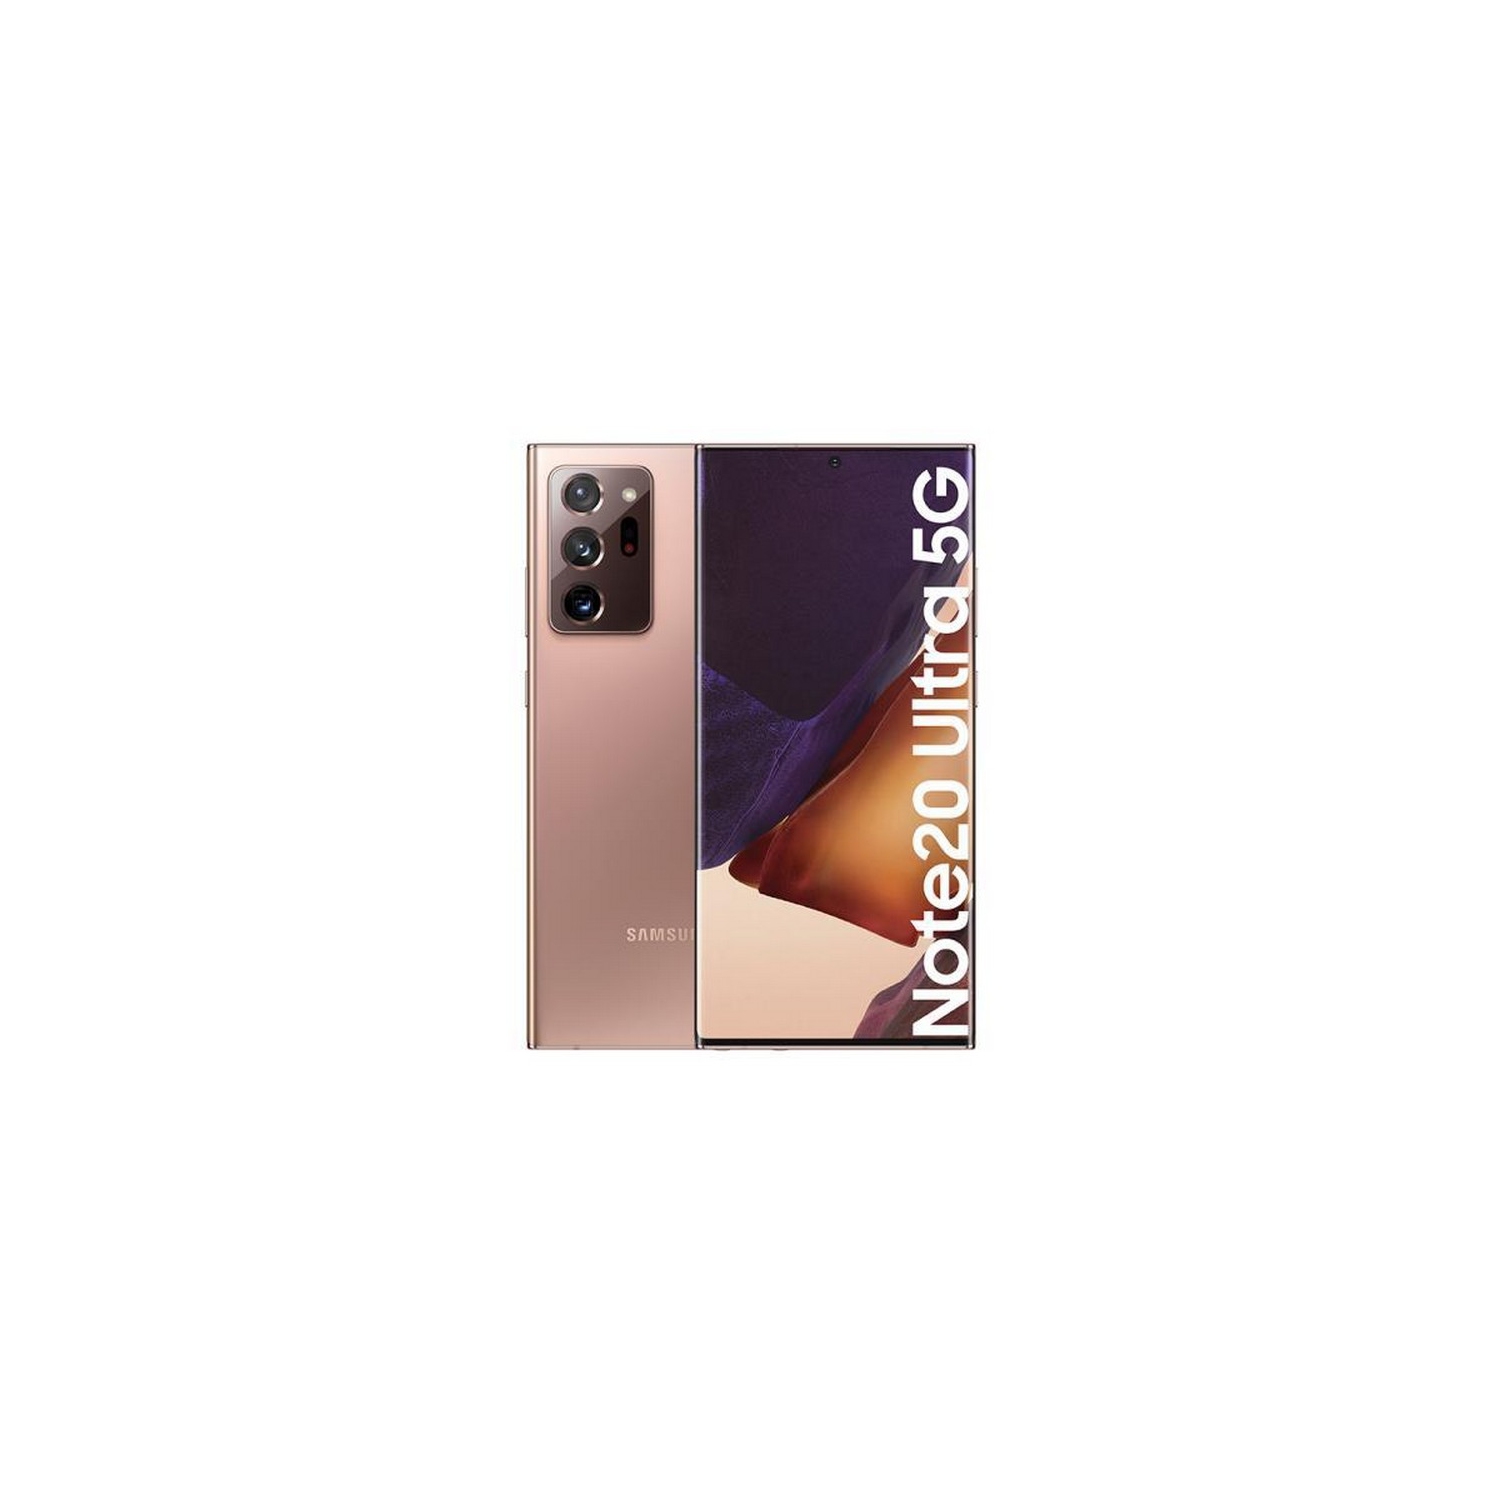 Samsung Galaxy Note 20 Ultra 5G | Bronze | 128 GB | Certified Refurbished